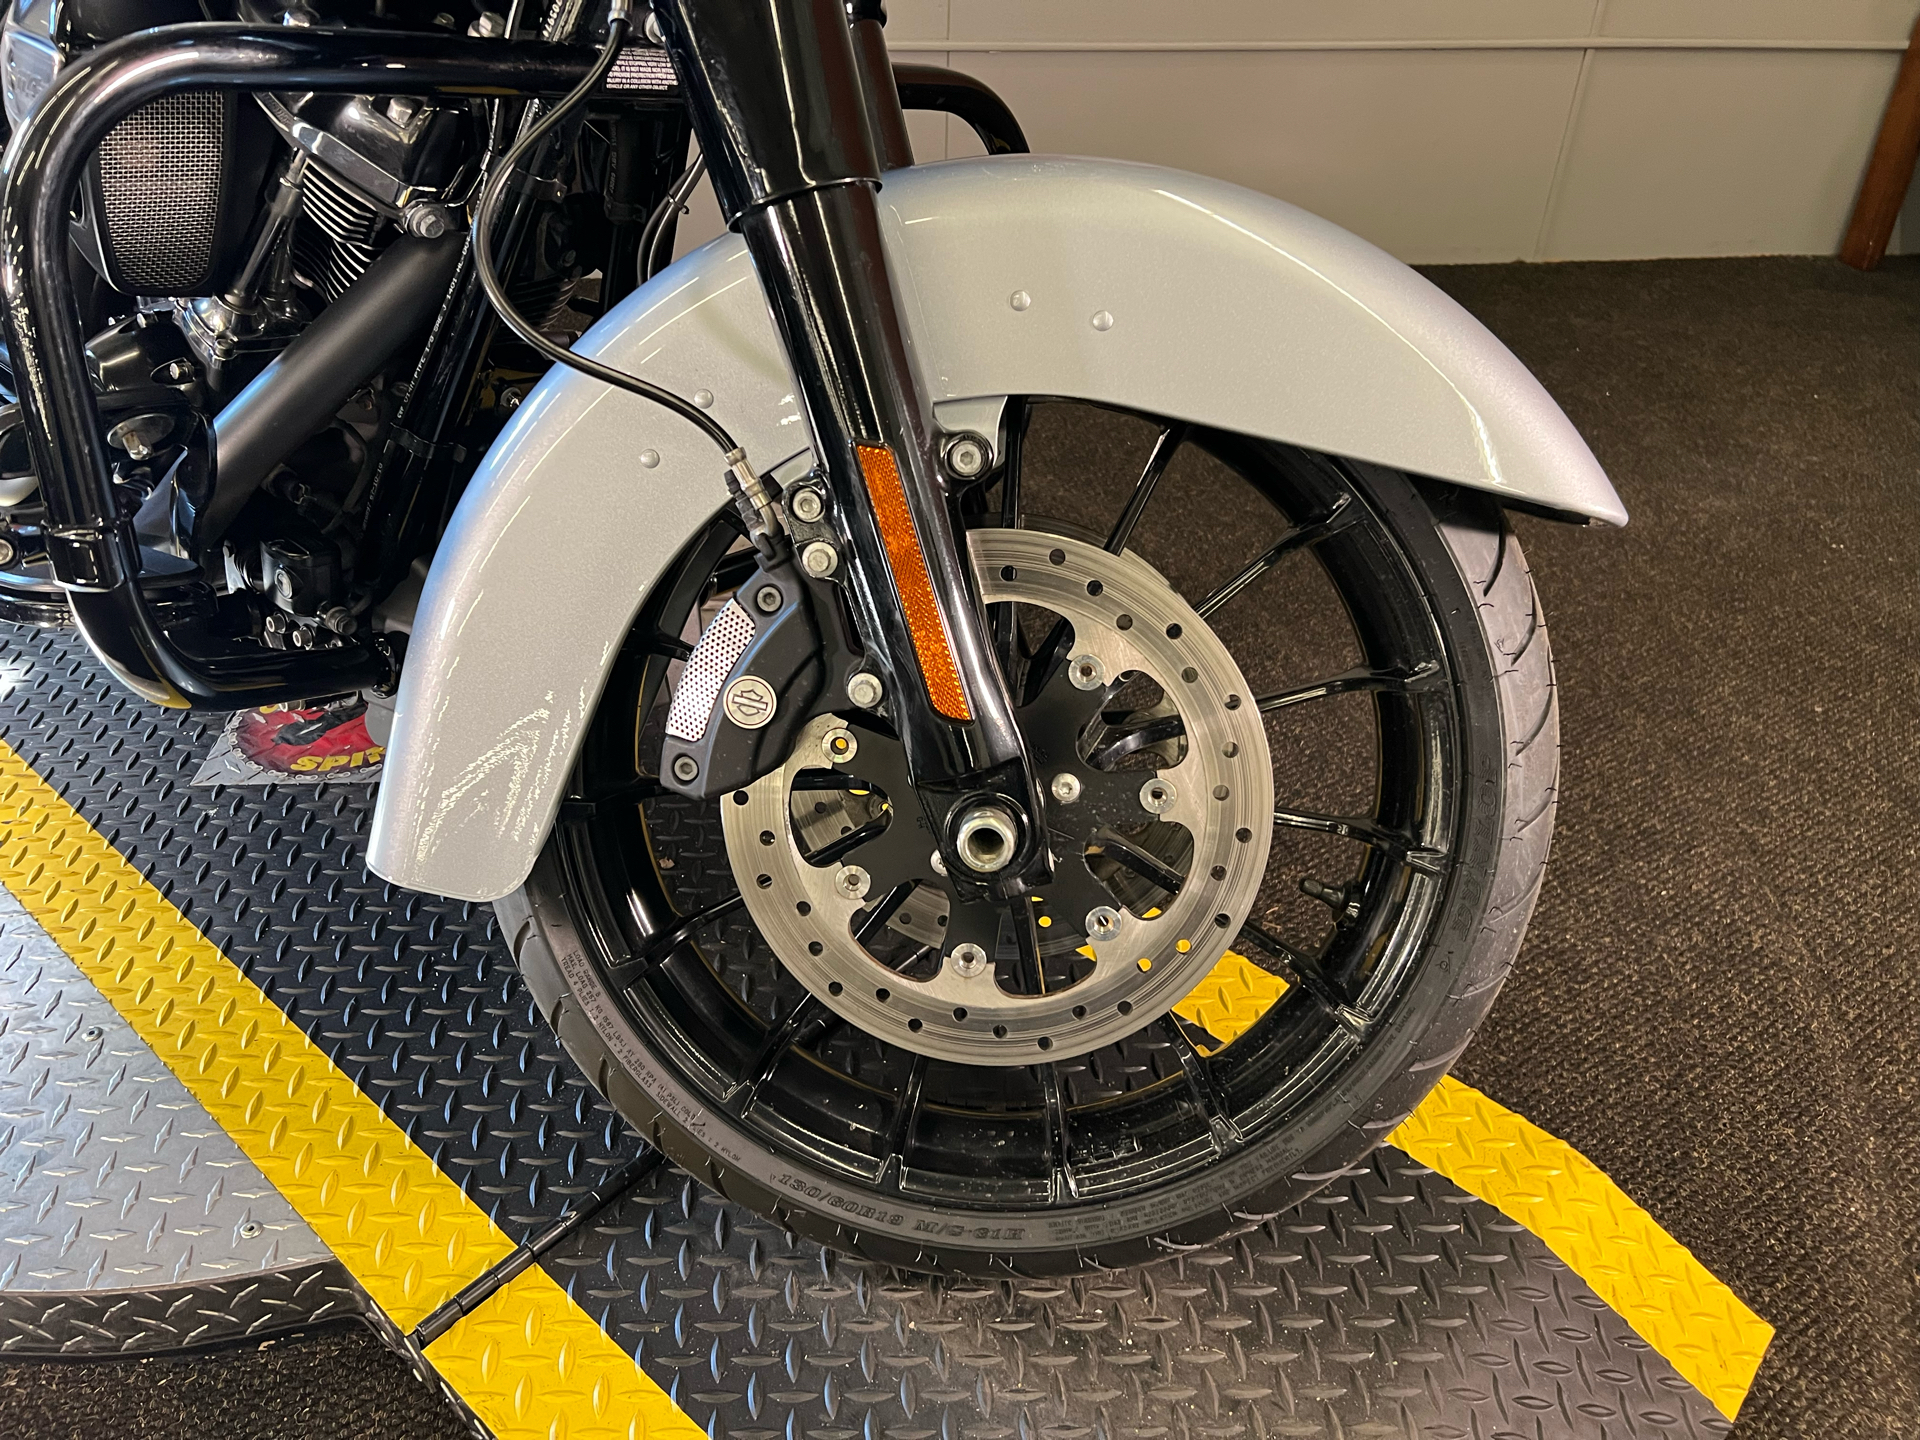 2019 Harley-Davidson Street Glide® Special in Tyrone, Pennsylvania - Photo 6